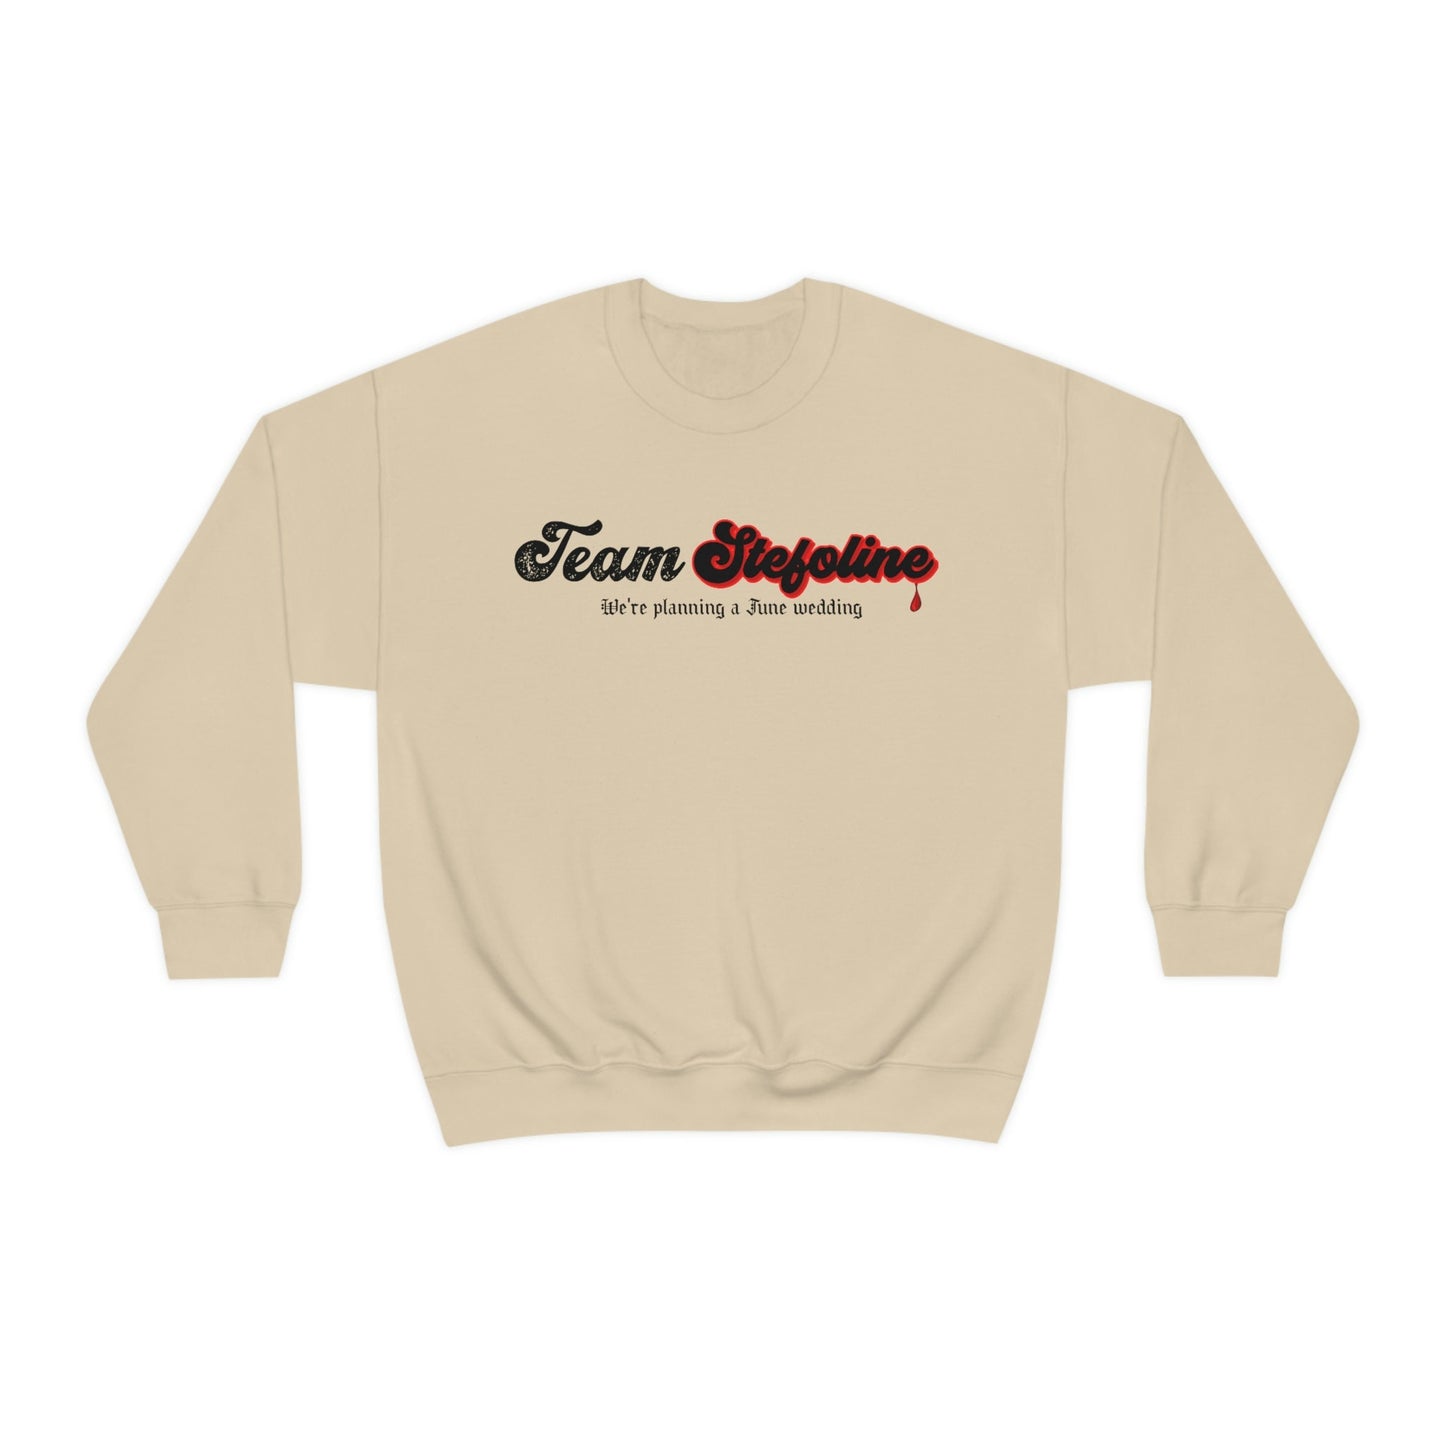 Team Stefoline sweatshirt, TVD sweatshirt, Tvd merch, TVD apparel, Stefan Salvatore, Caroline Forbes, The Vampire diaries, TVD gift